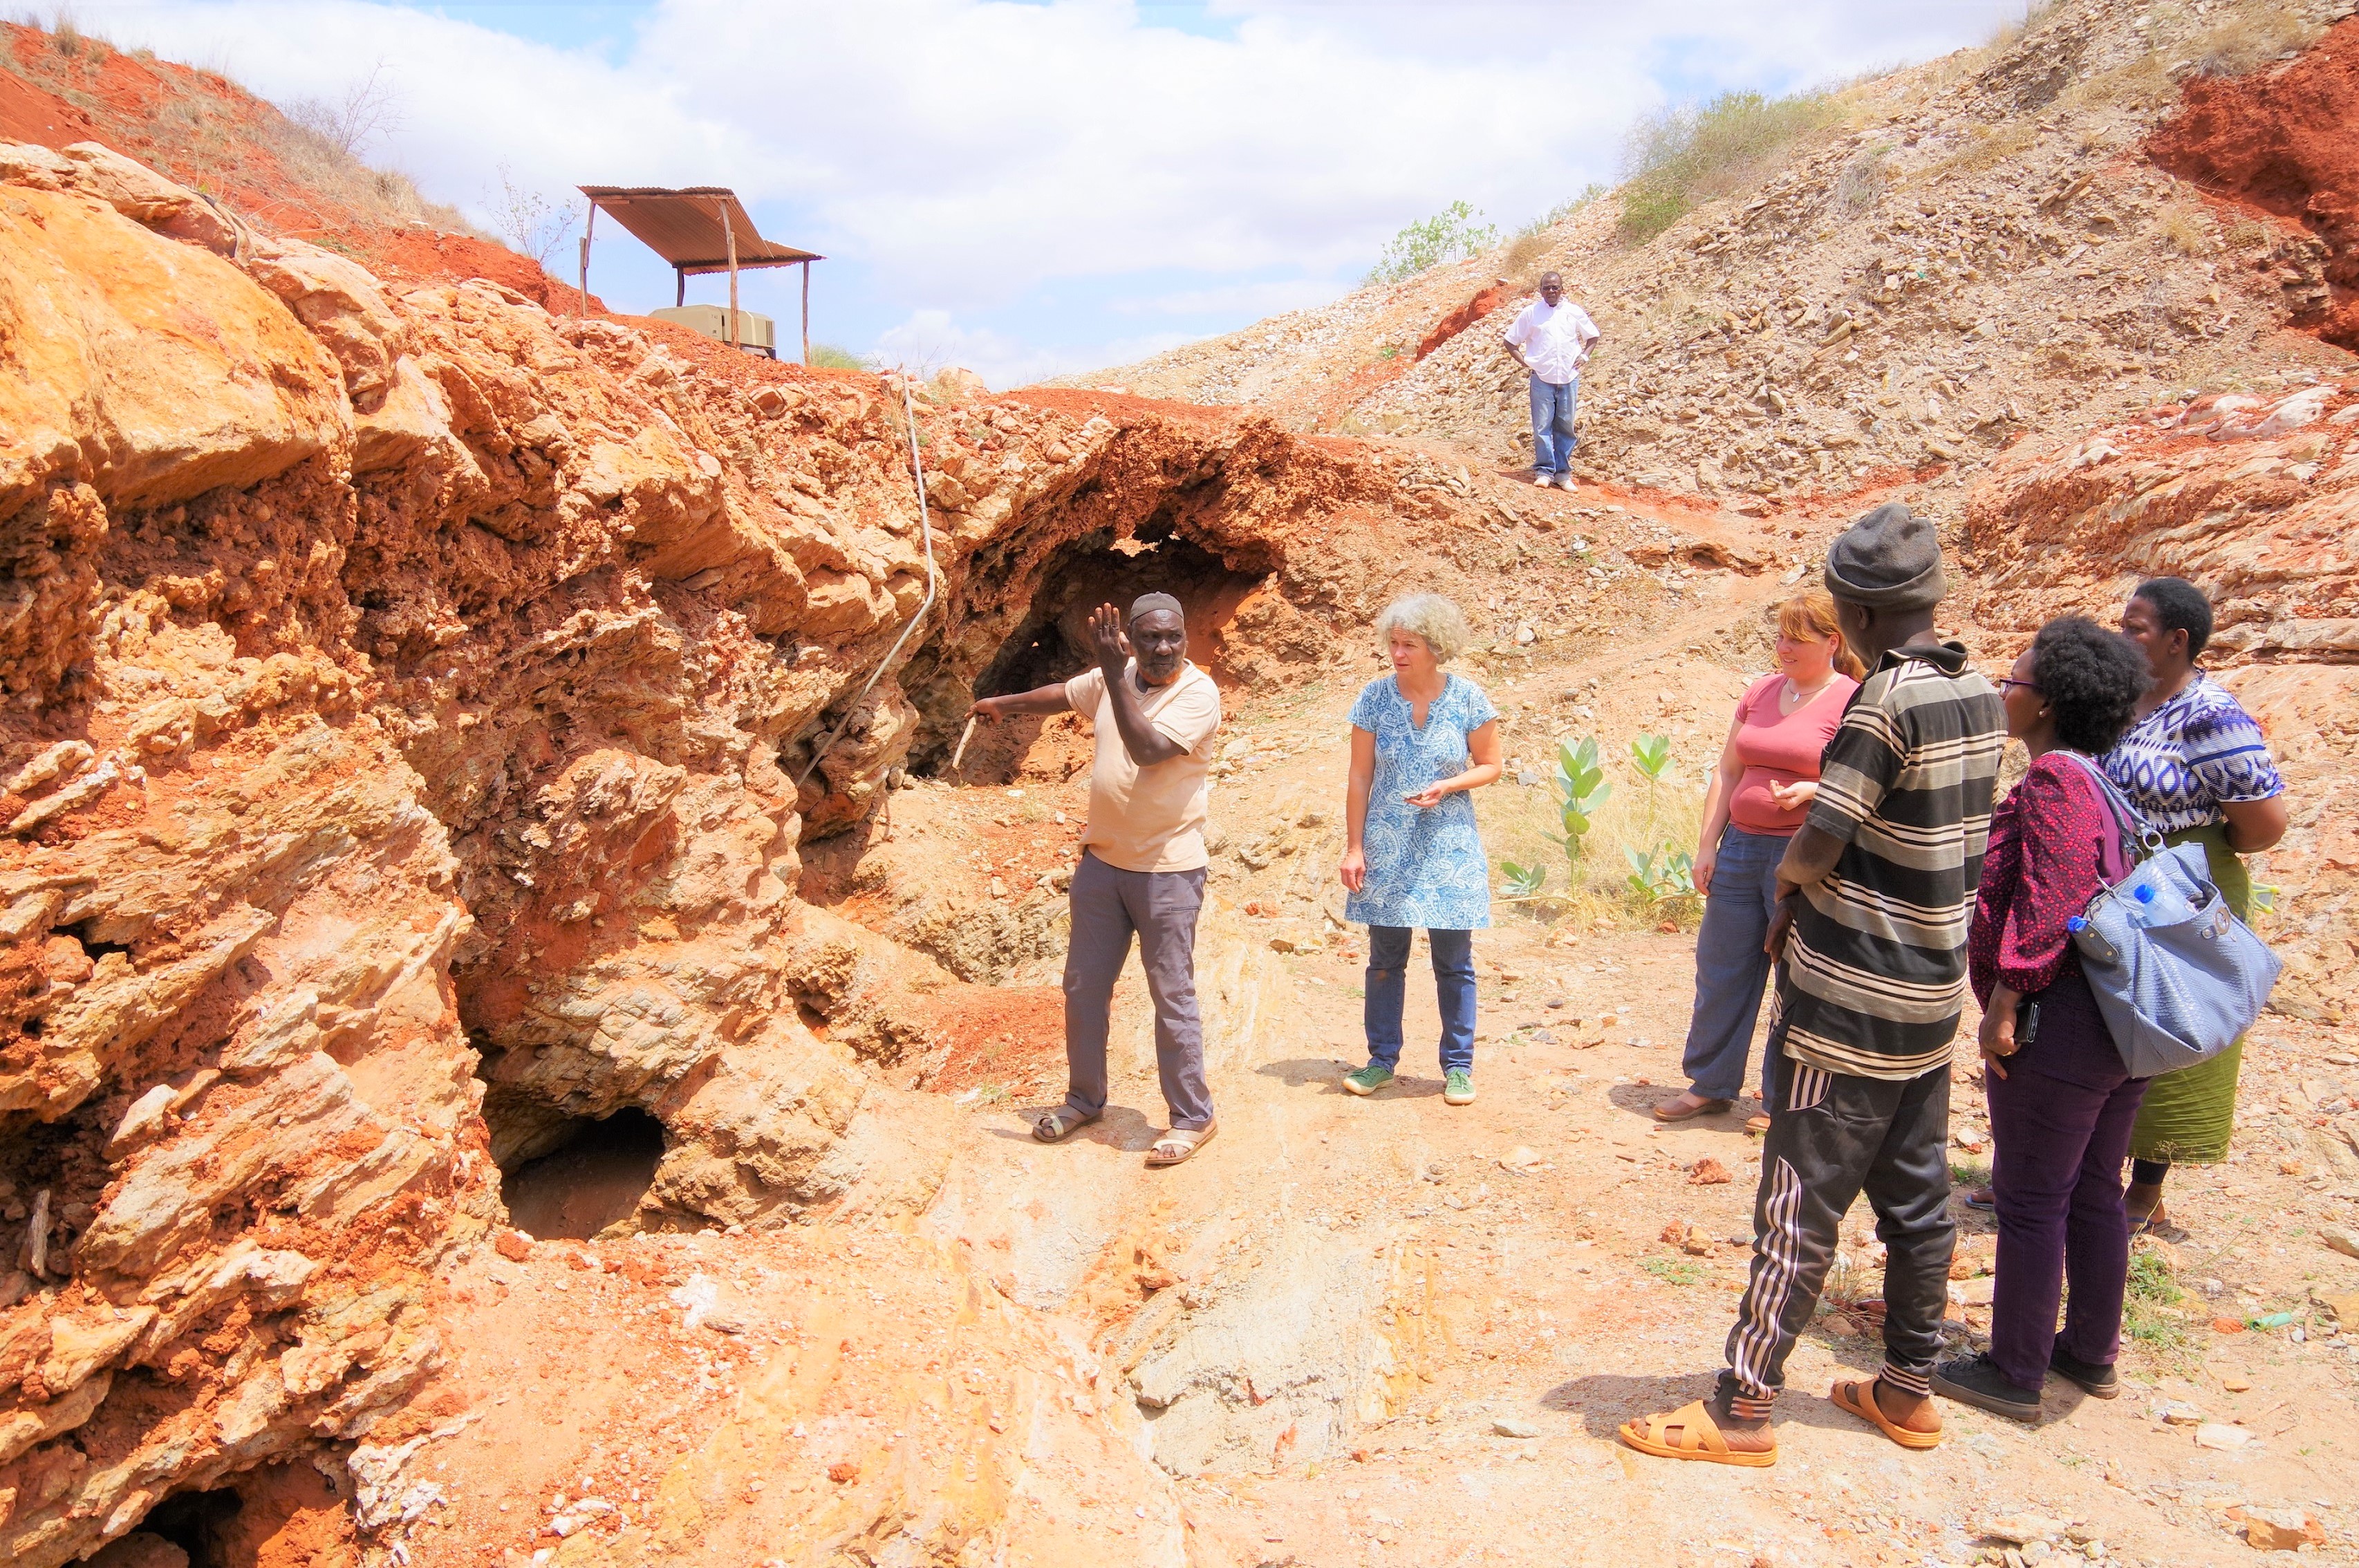 Gemstone mining as practiced throughout Taita Taveta county